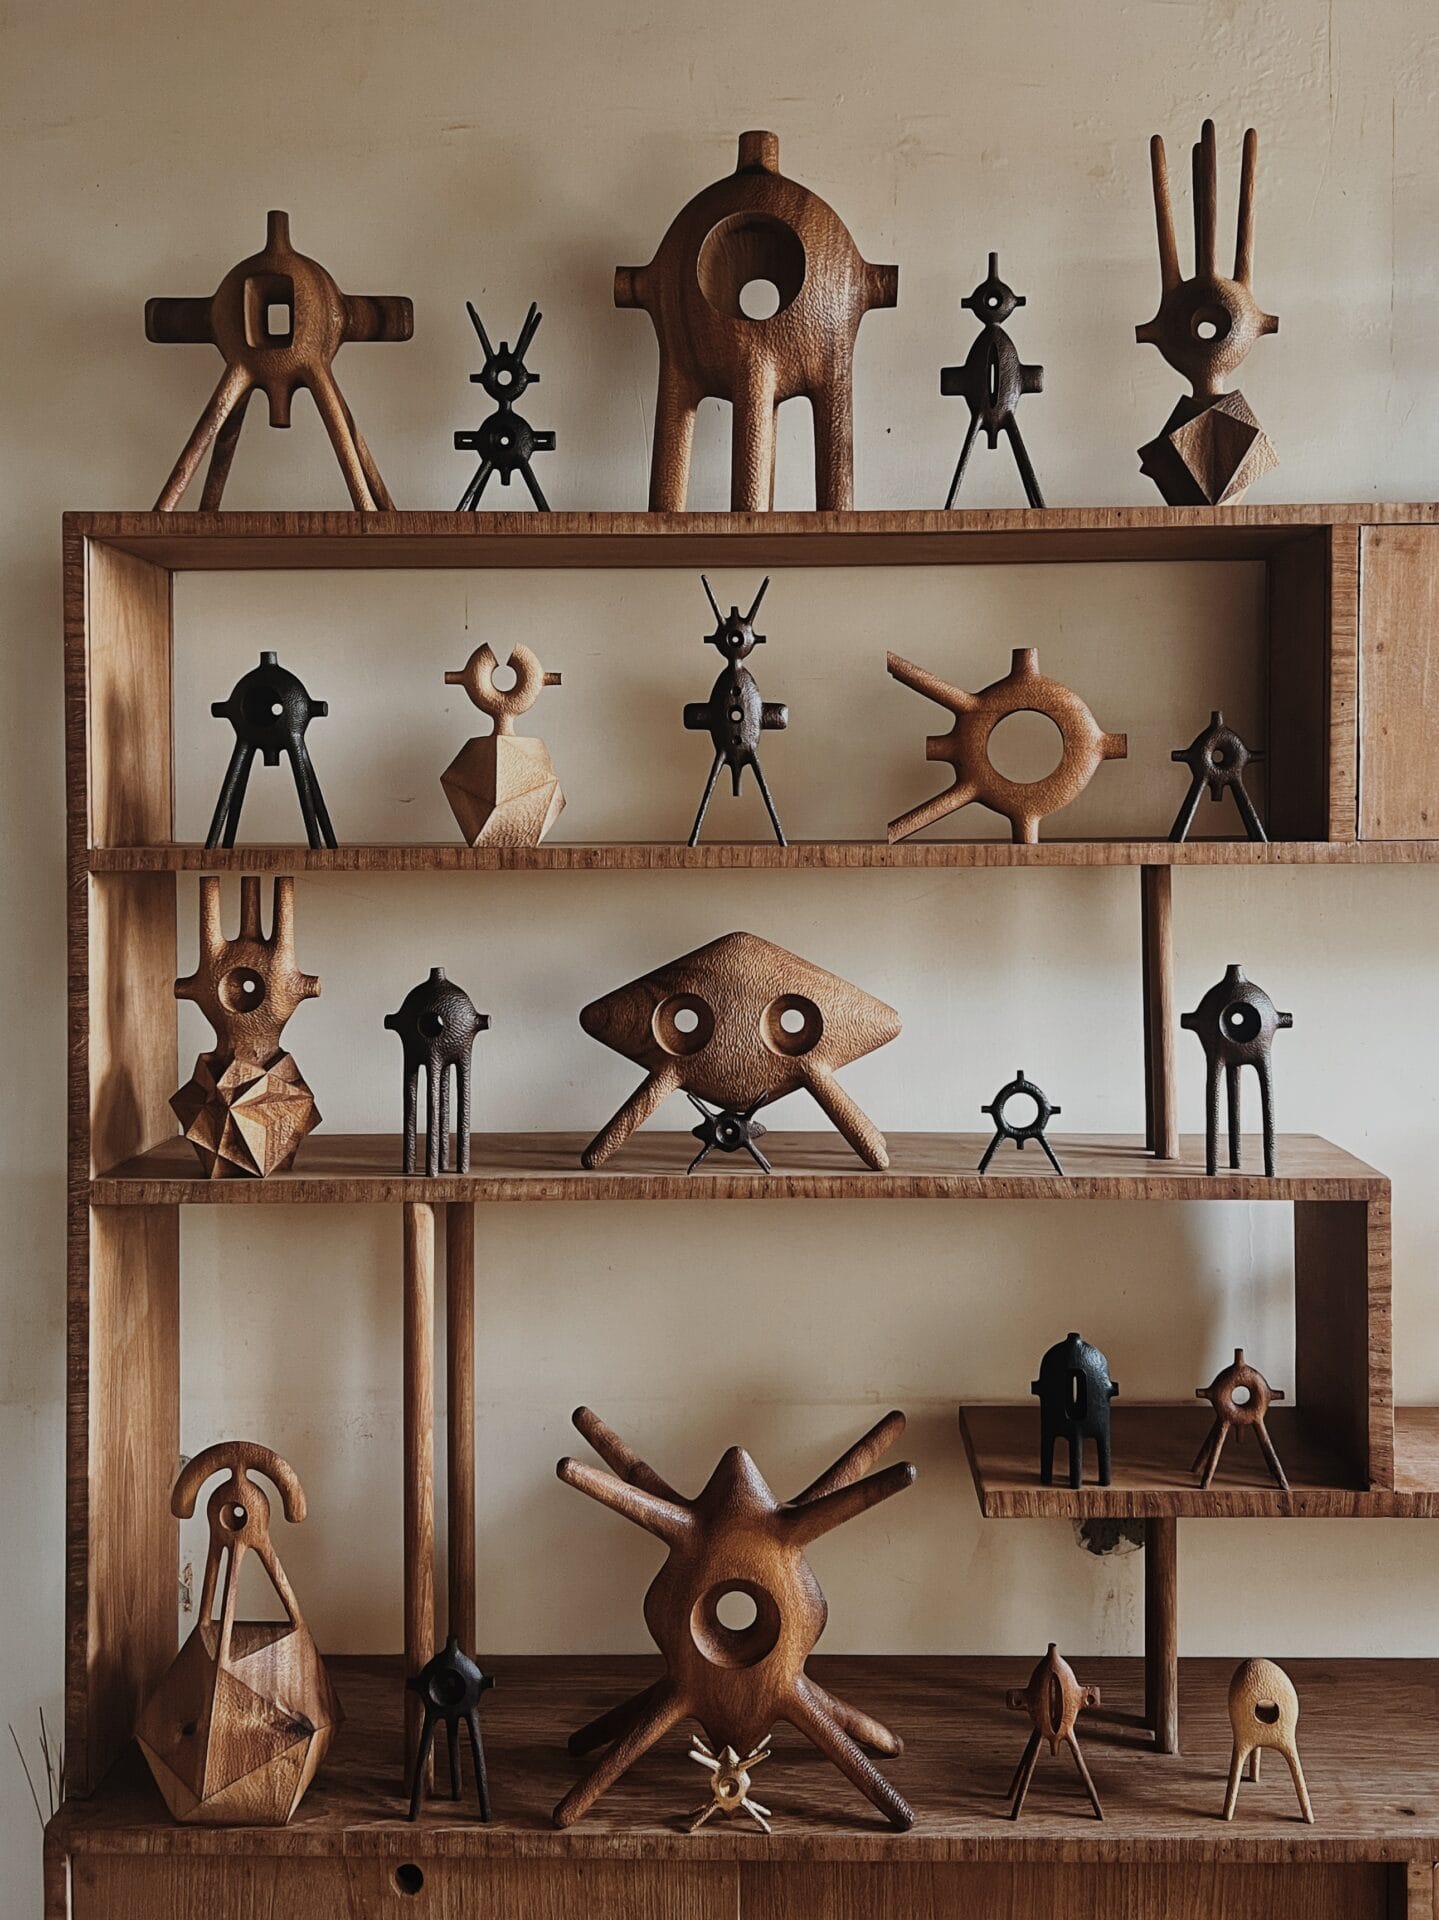 Aleph Geddis Wood Sculptures